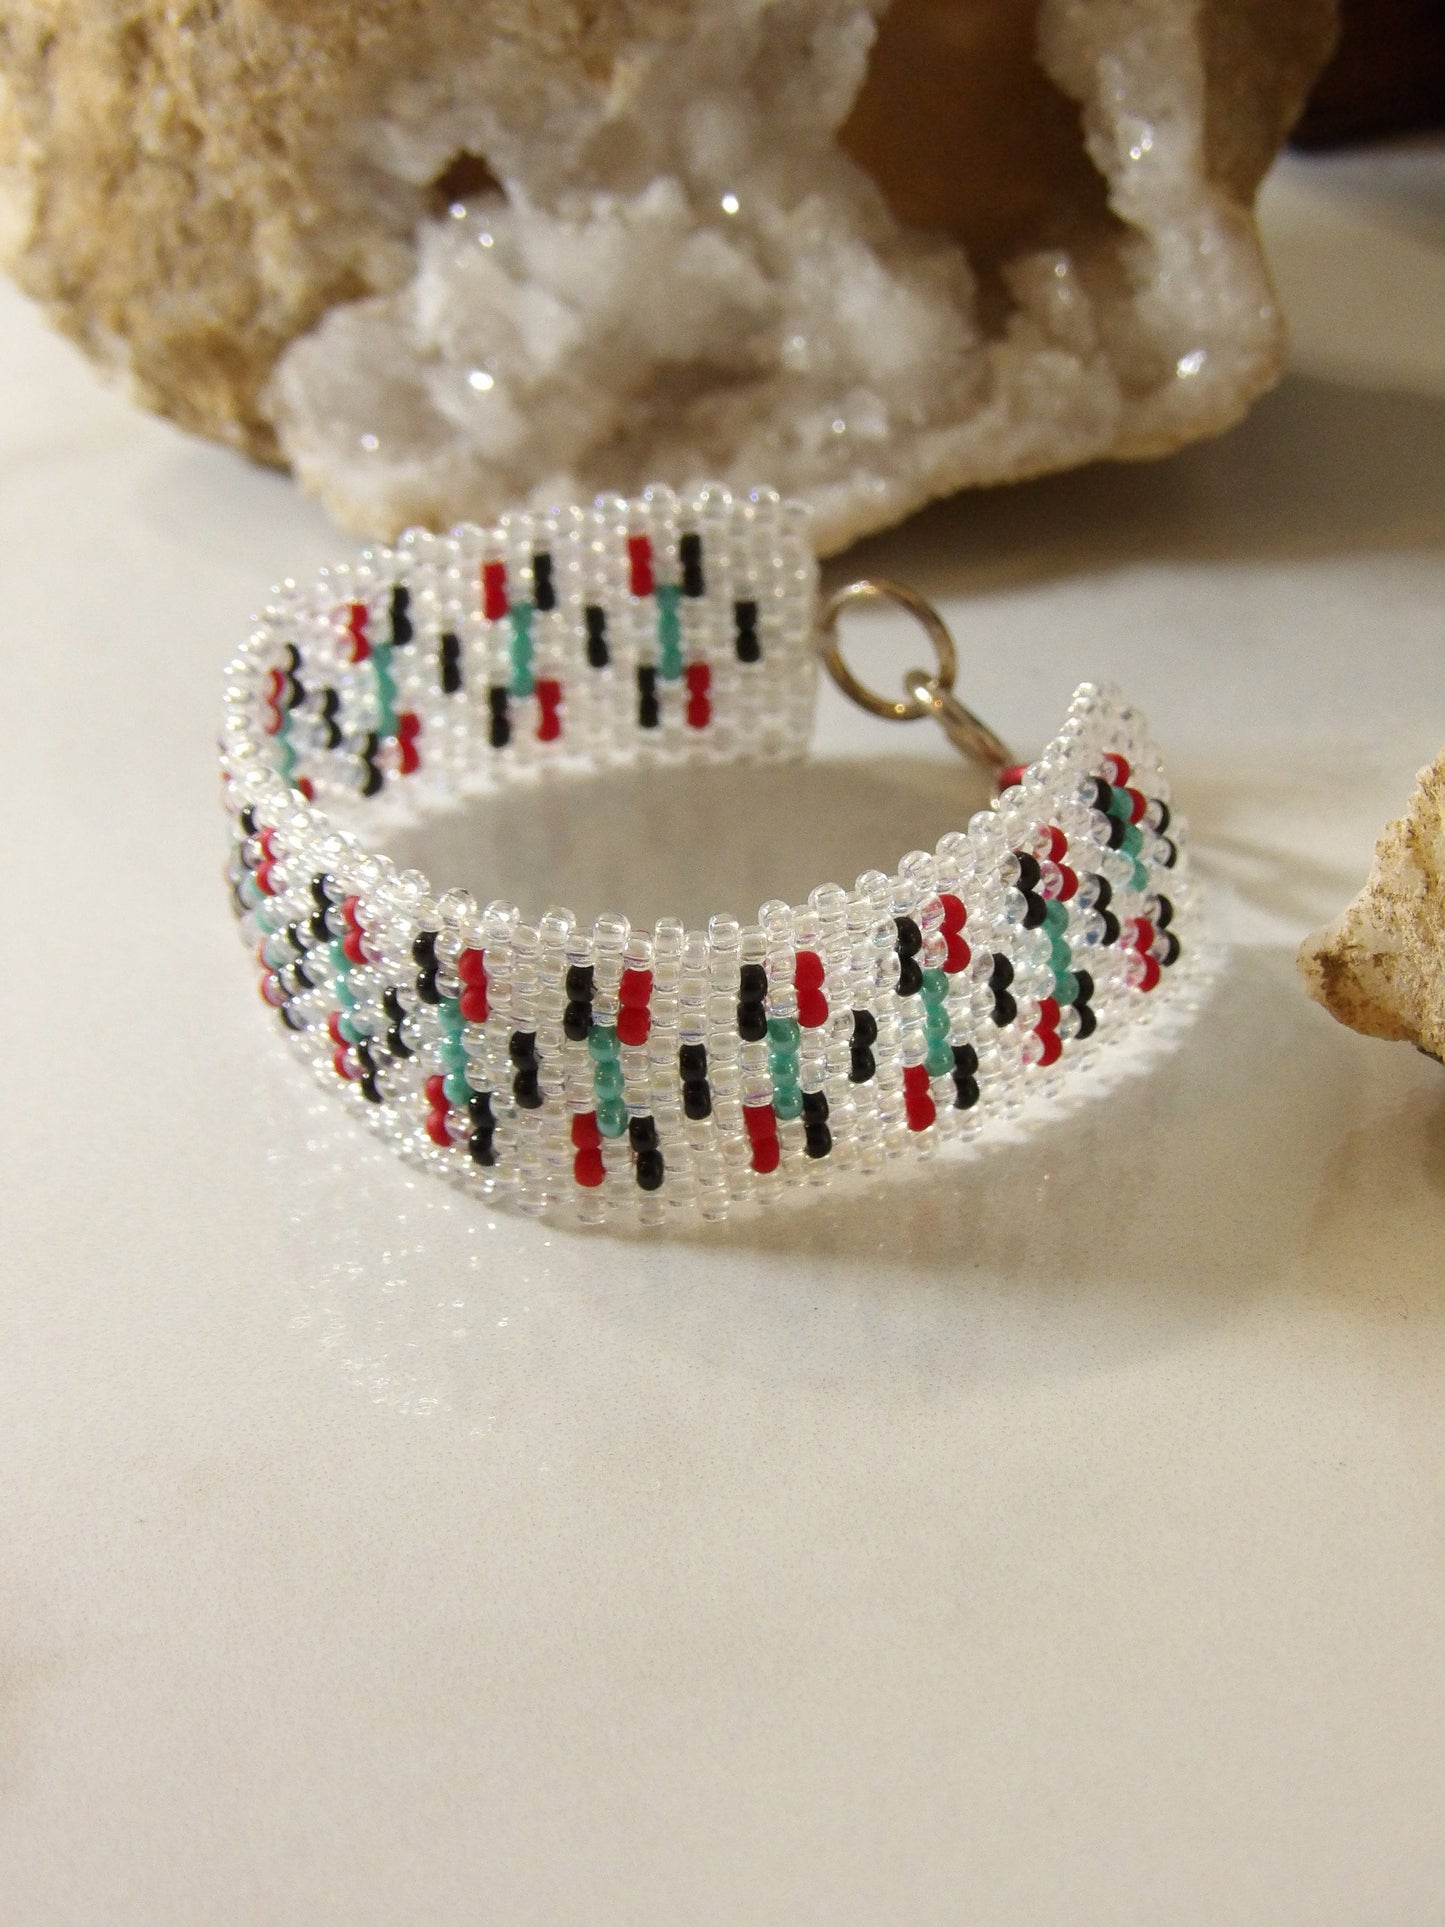 Boho Seed Bead Cuff Bracelet - Southwestern Design | Handmade Bohemian Jewelry | Hippie Jewelry | Handwoven Beadwork Made In USA